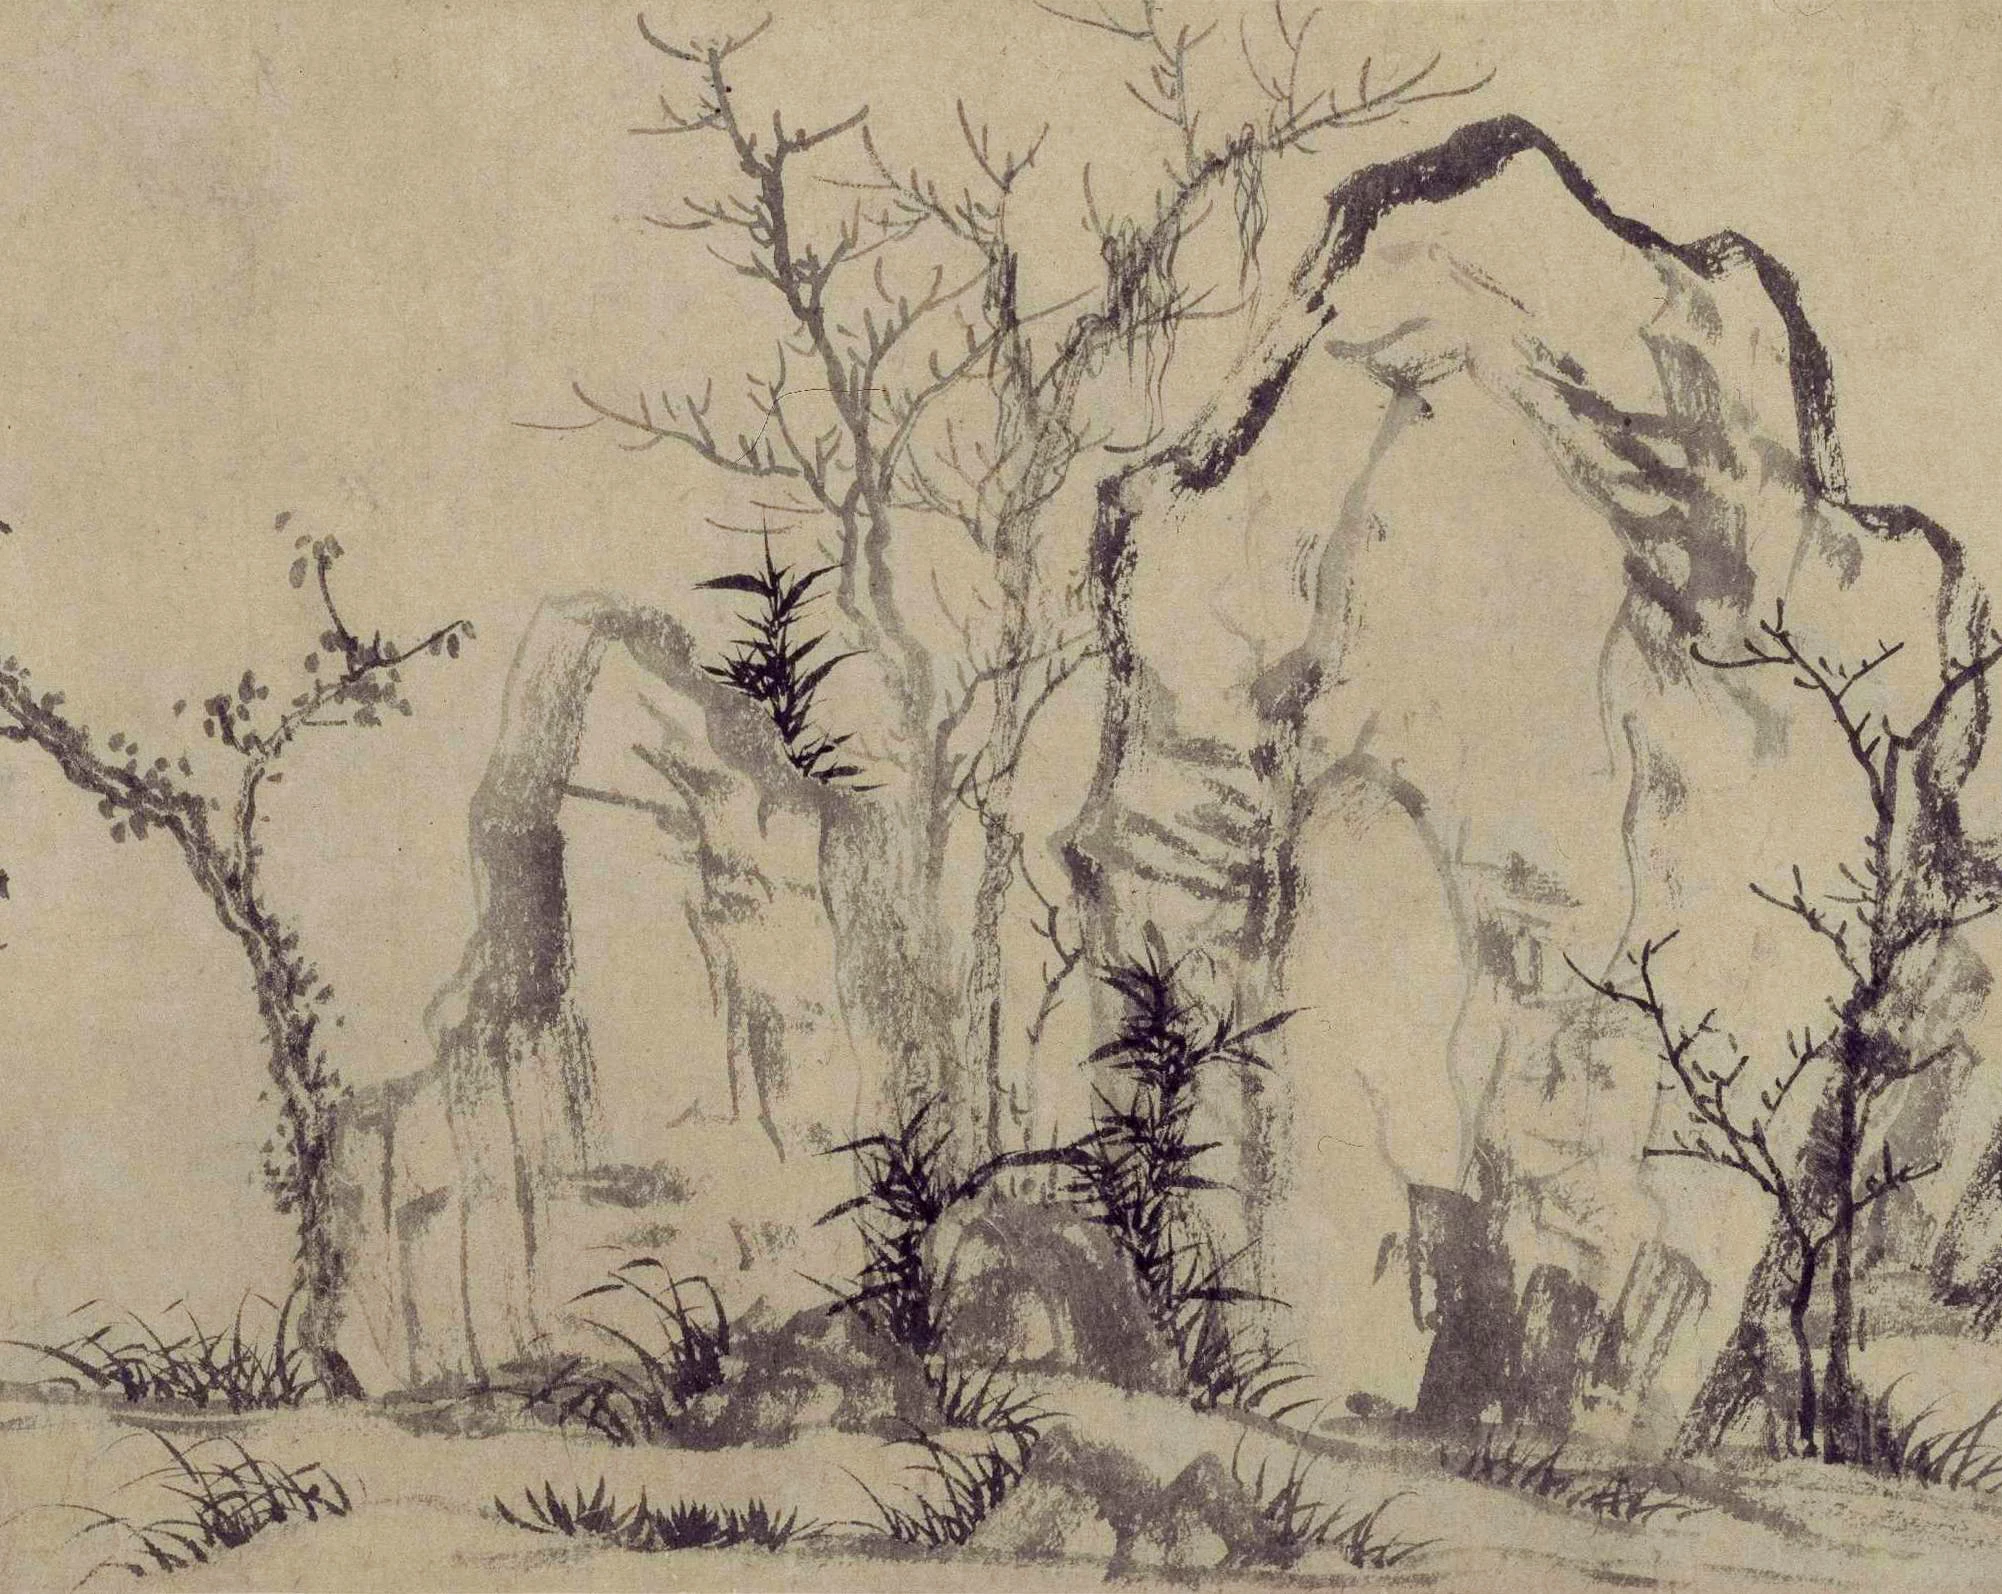 Zhao Mengfu, The Artists